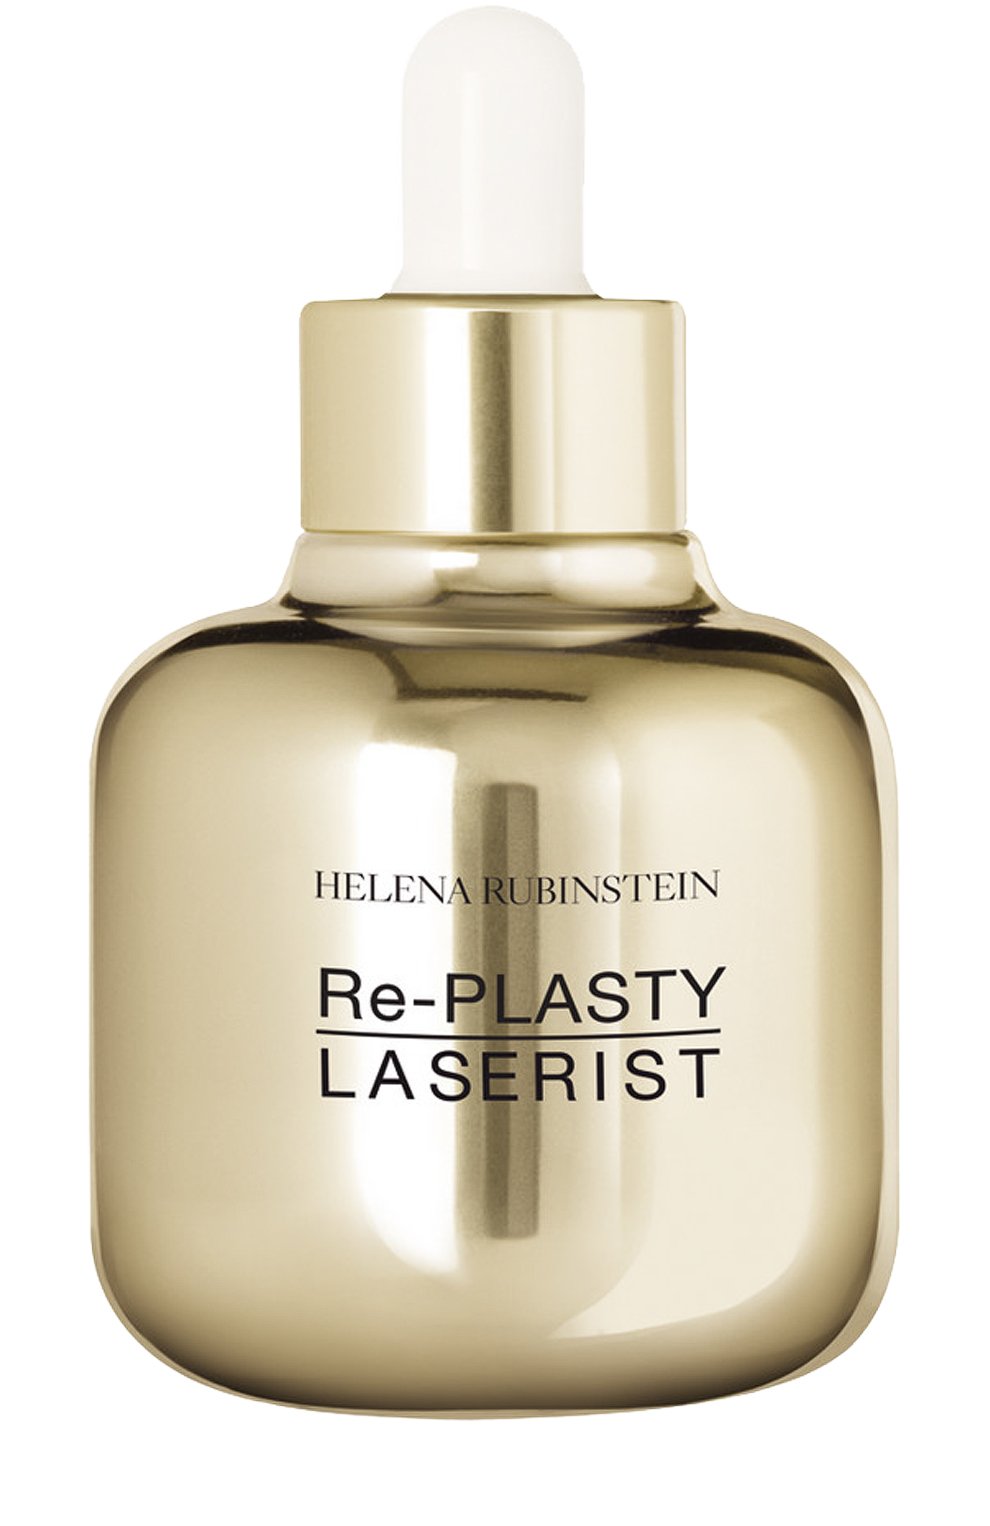 Re-Plasty - Re-Plasty Laserist Serum - Helena Rubinstein